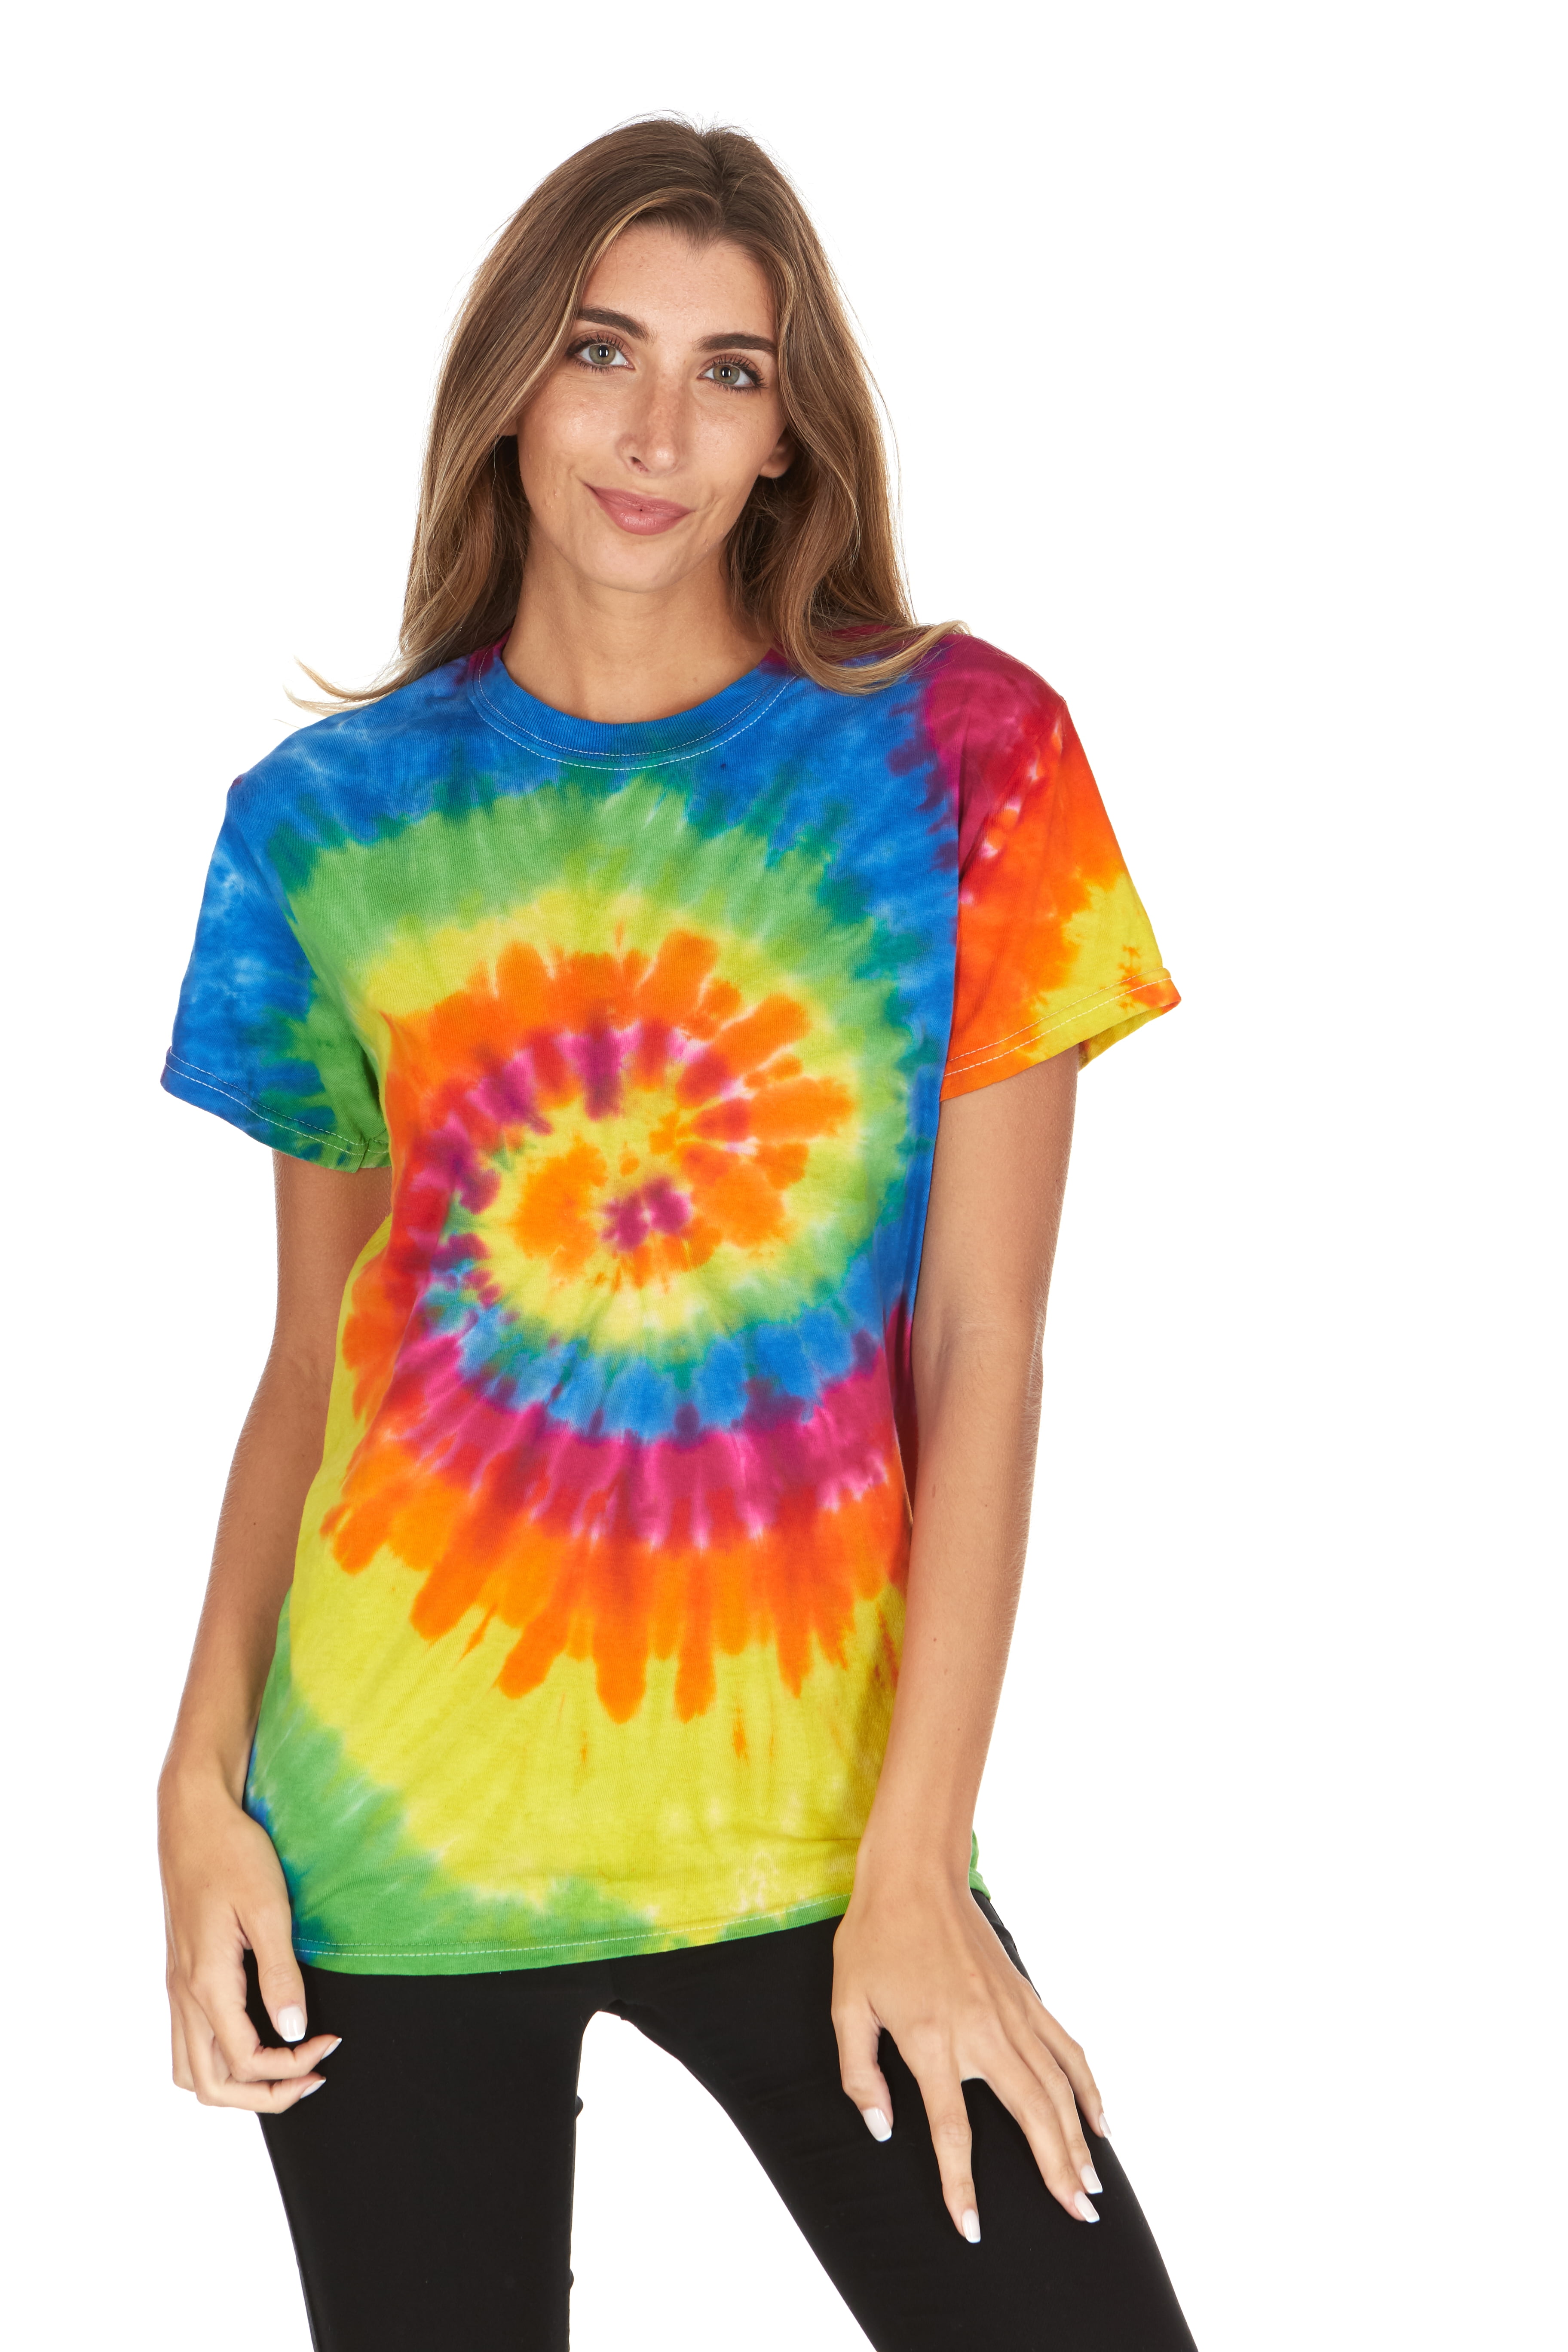 Daresay - "Krazy Tees Tie Dye T-Shirt, Moondance, Large" - Walmart.com